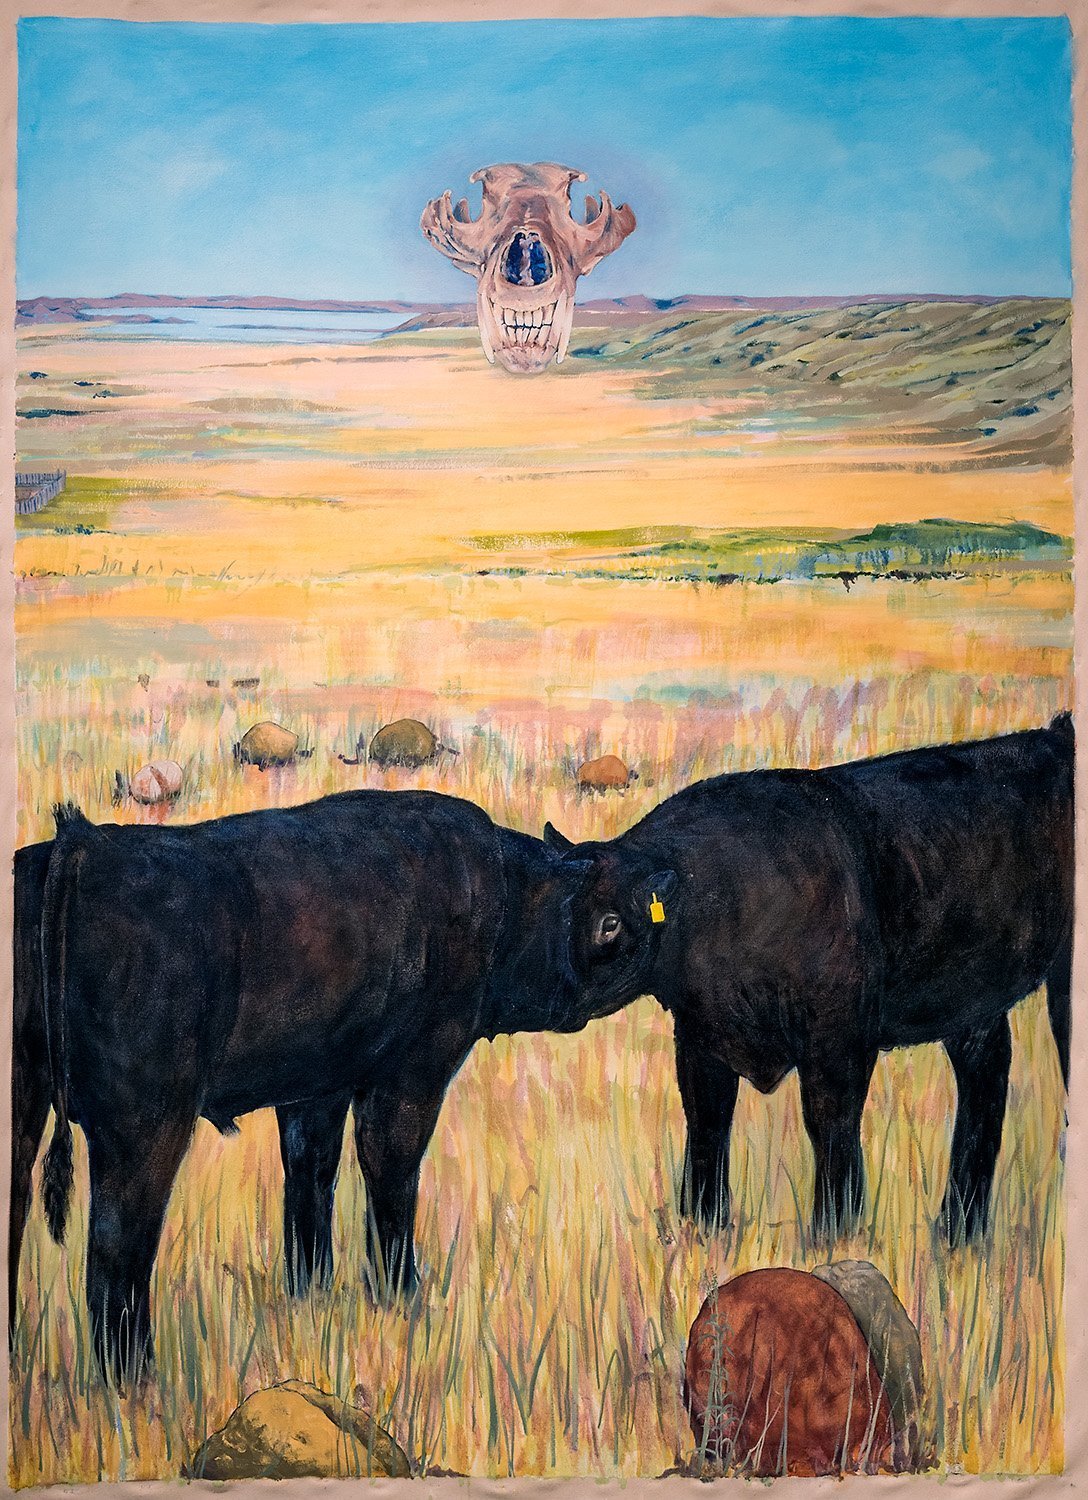 Bulls or Bears by Diana Chabros